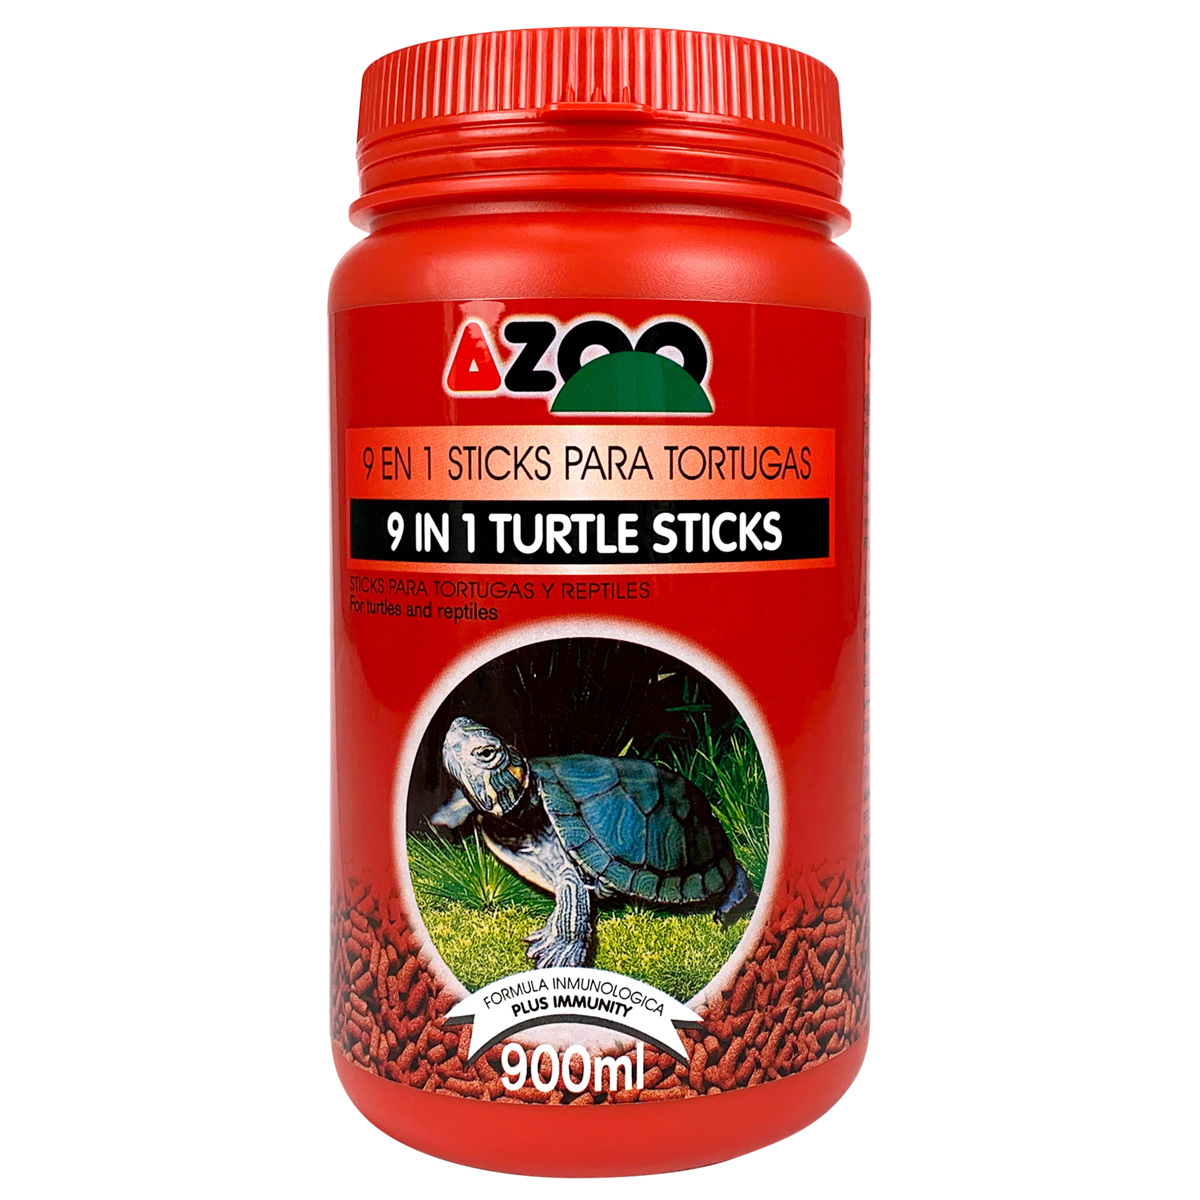 Azoo 9 en 1 Alimento Tipo Sticks Flotantes para Tortugas Acuáticas y Reptiles, 300 g